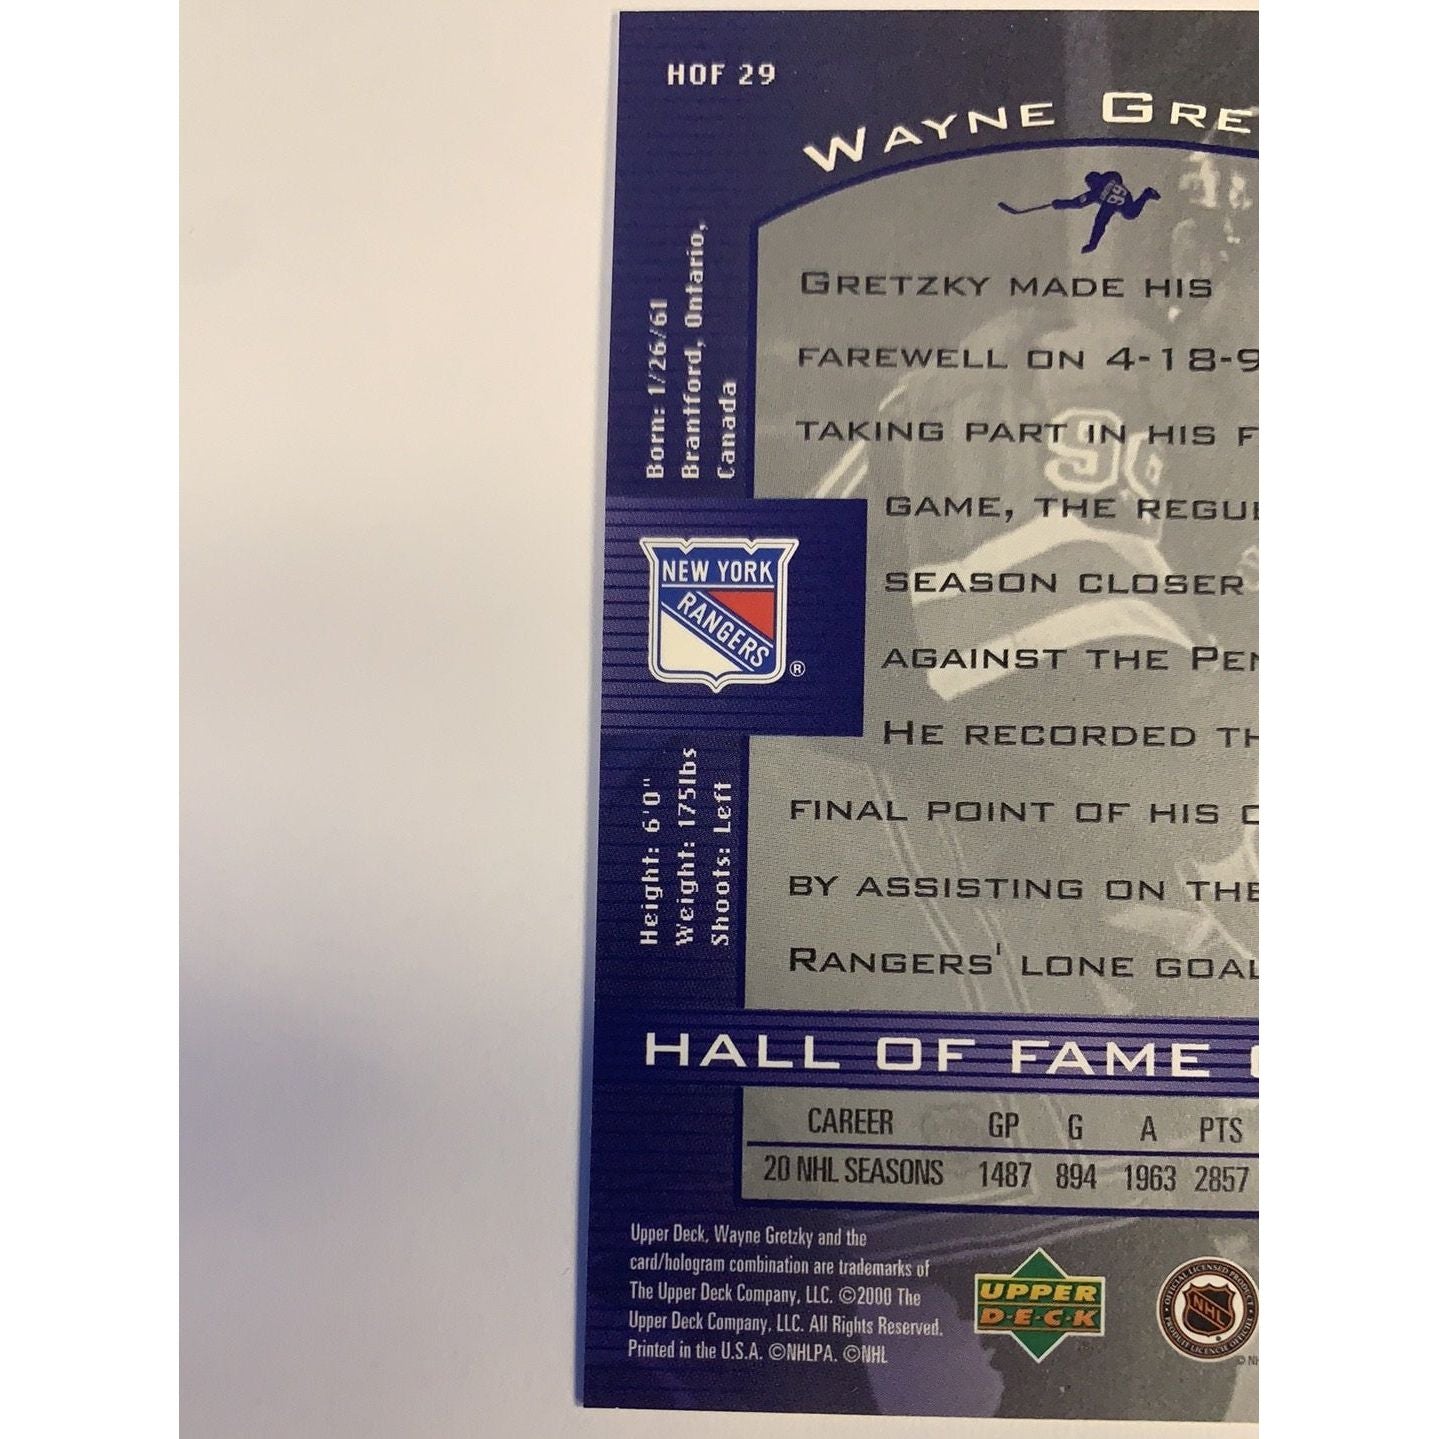  2000 Upper Deck Hall of Fame Career Wayne Gretzky HOF 29  Local Legends Cards & Collectibles